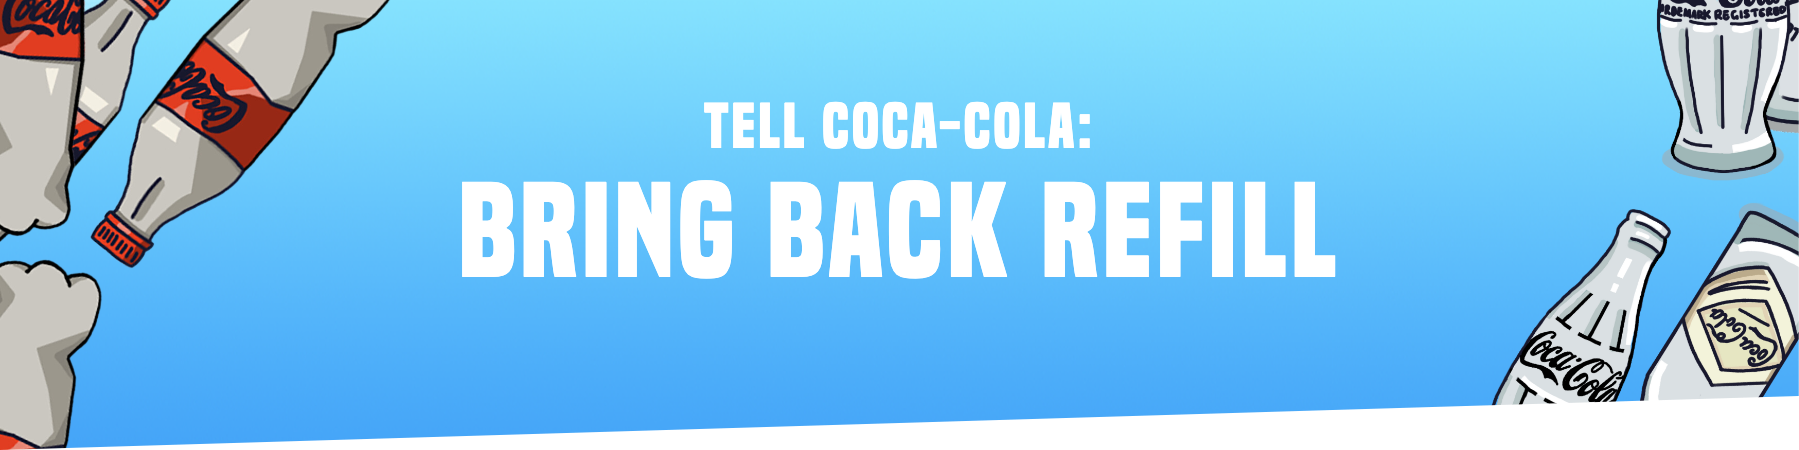 Tell Coca-Cola: Bring Back Refill